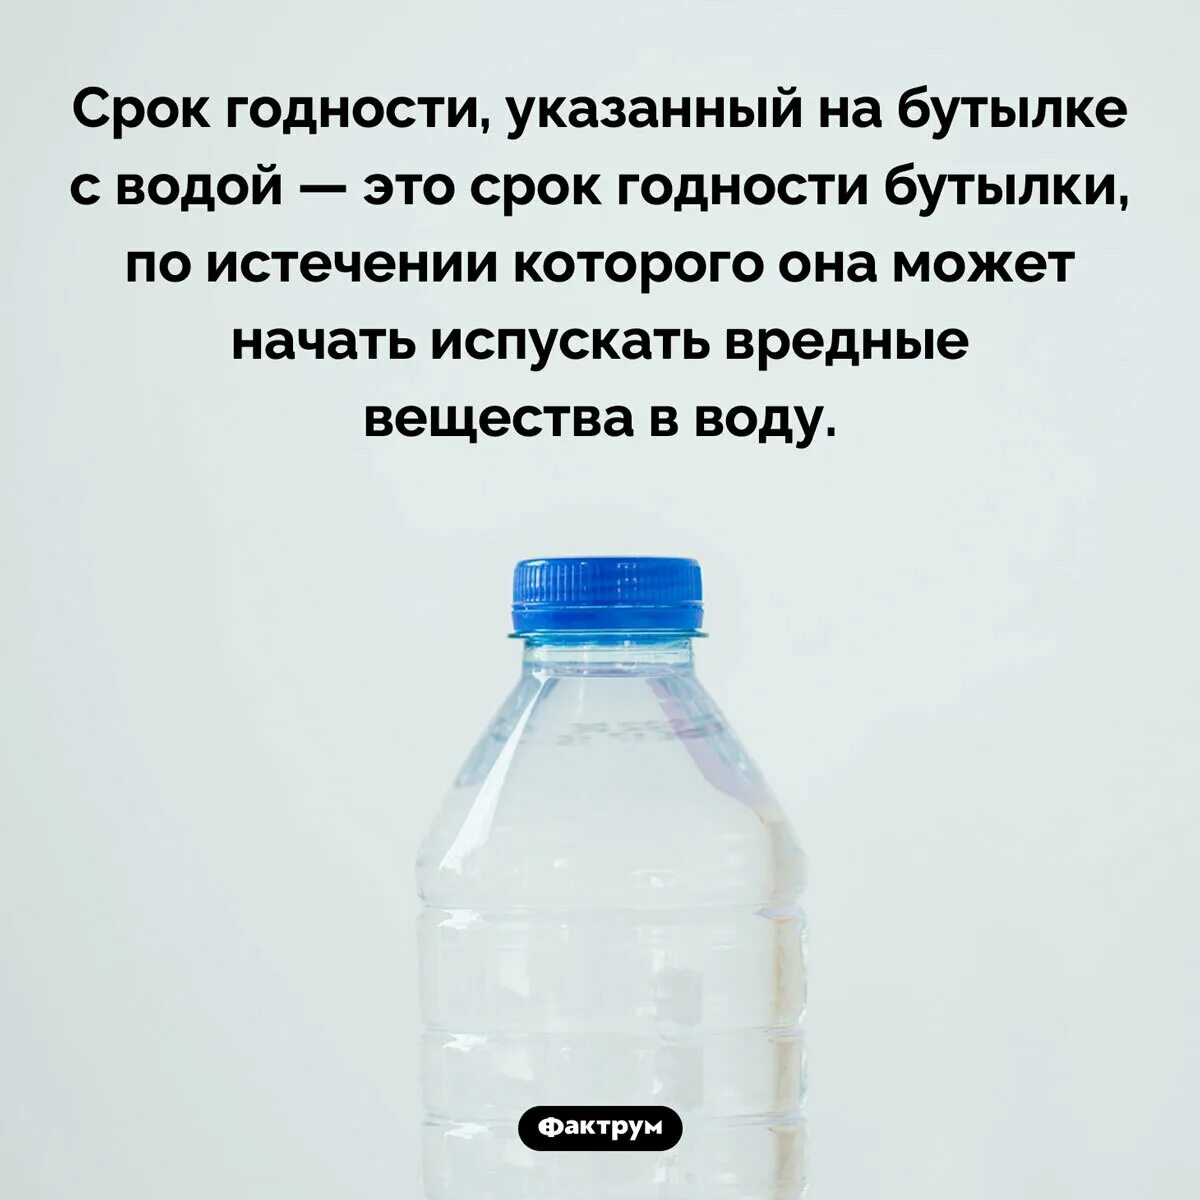 Срок годности на бутылке. Срок годности воды. Вода питьевая срок годности. Срок годности жидкости.